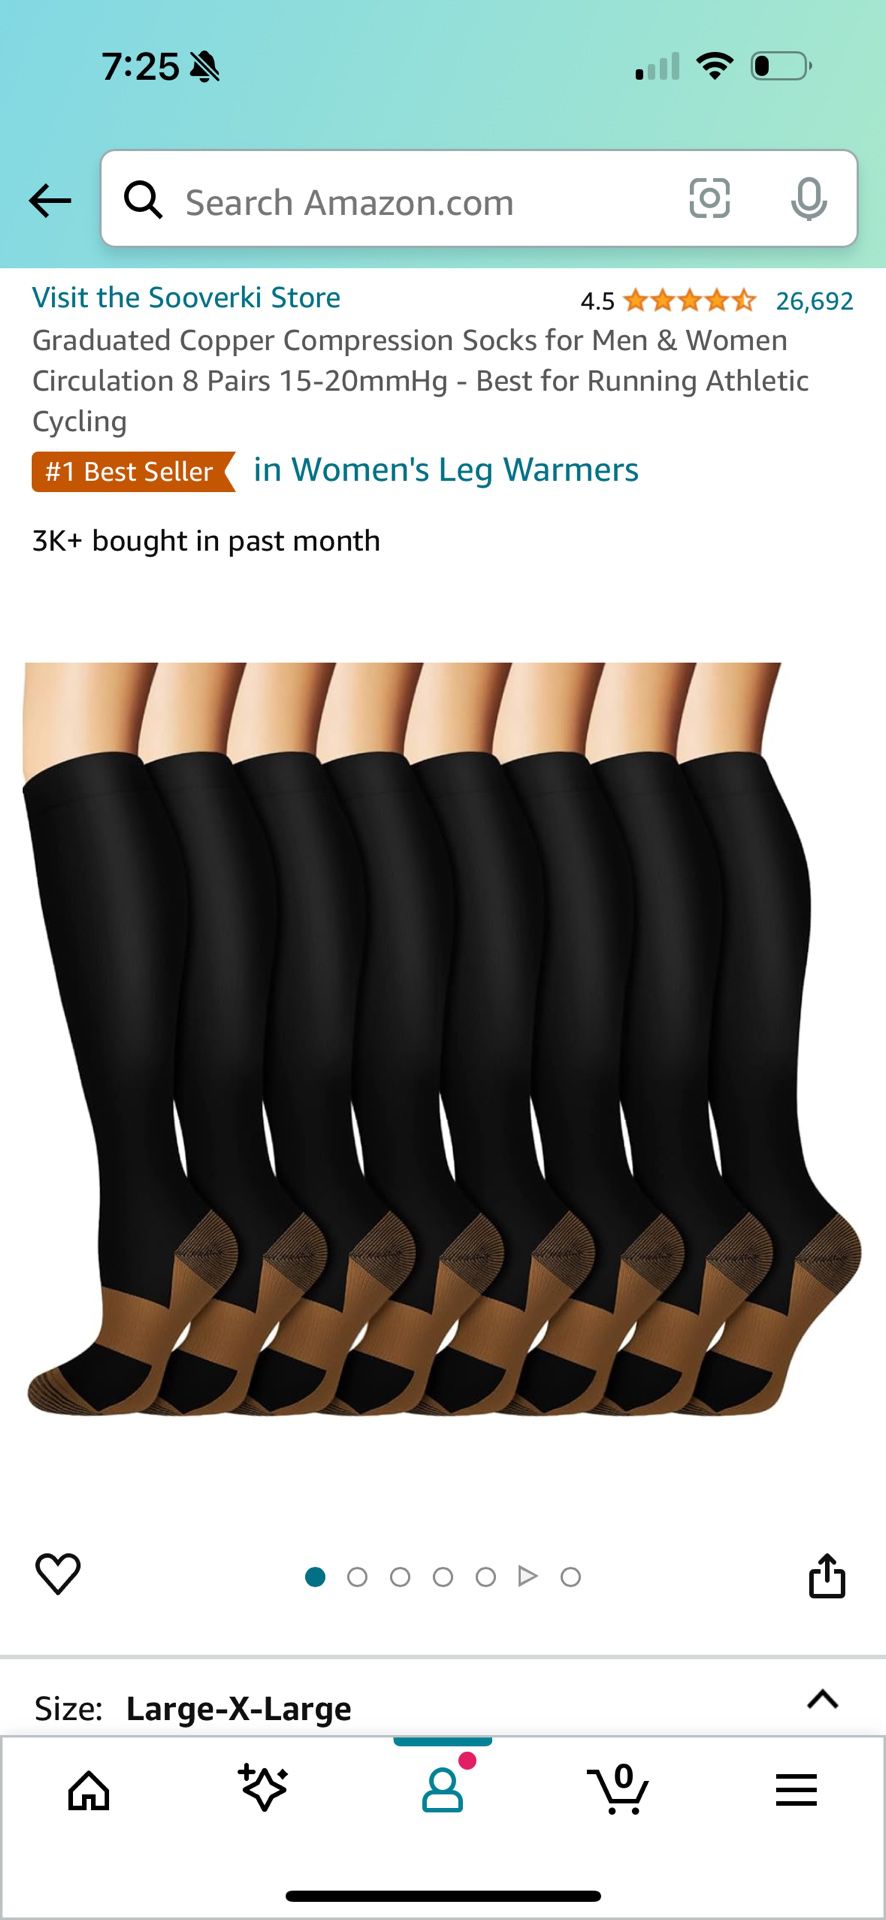 5 Pair Graduated Copper Compression Socks for Men & Women